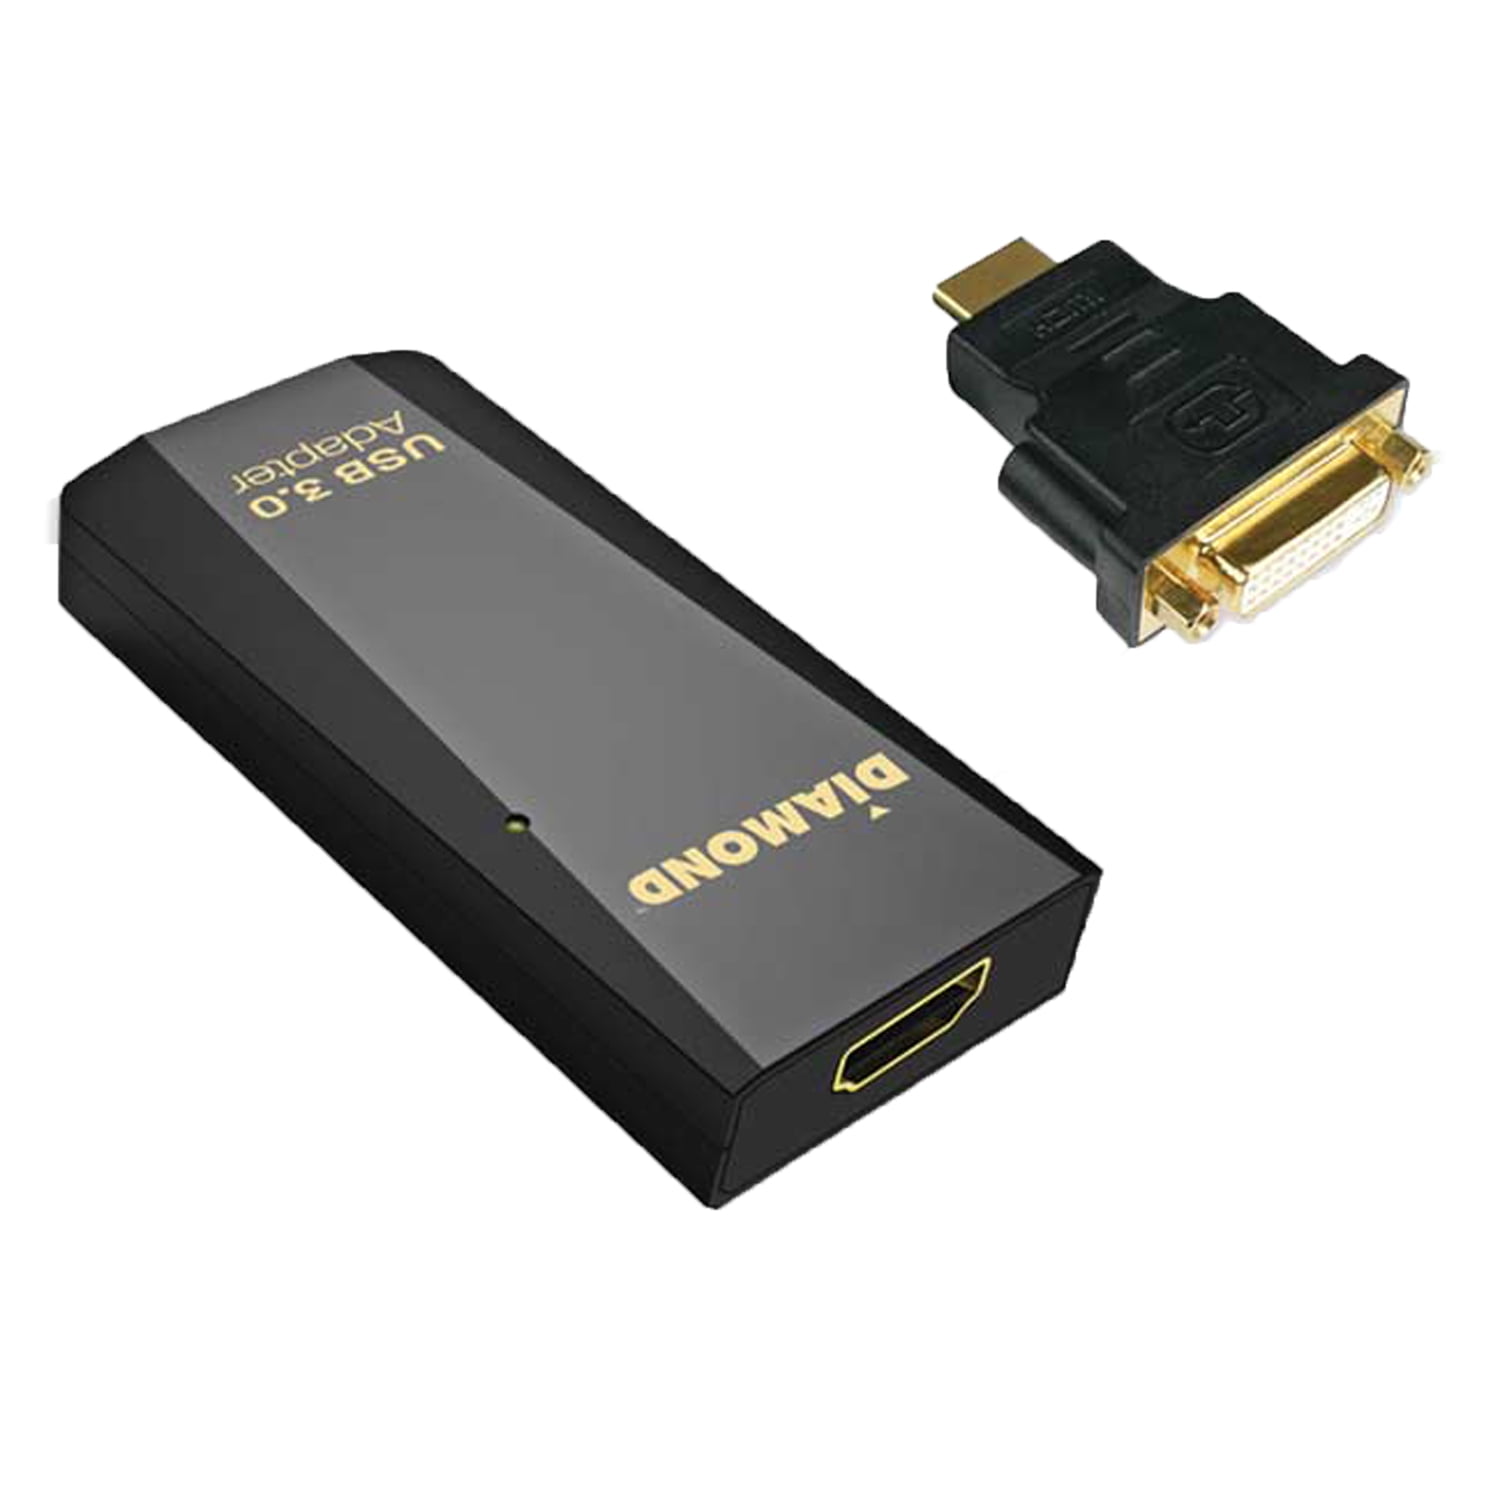 Diamond USB to DVI/HDMI Video Graphics Adapter up to 2560x1440, 1920x1080, Black - Walmart.com